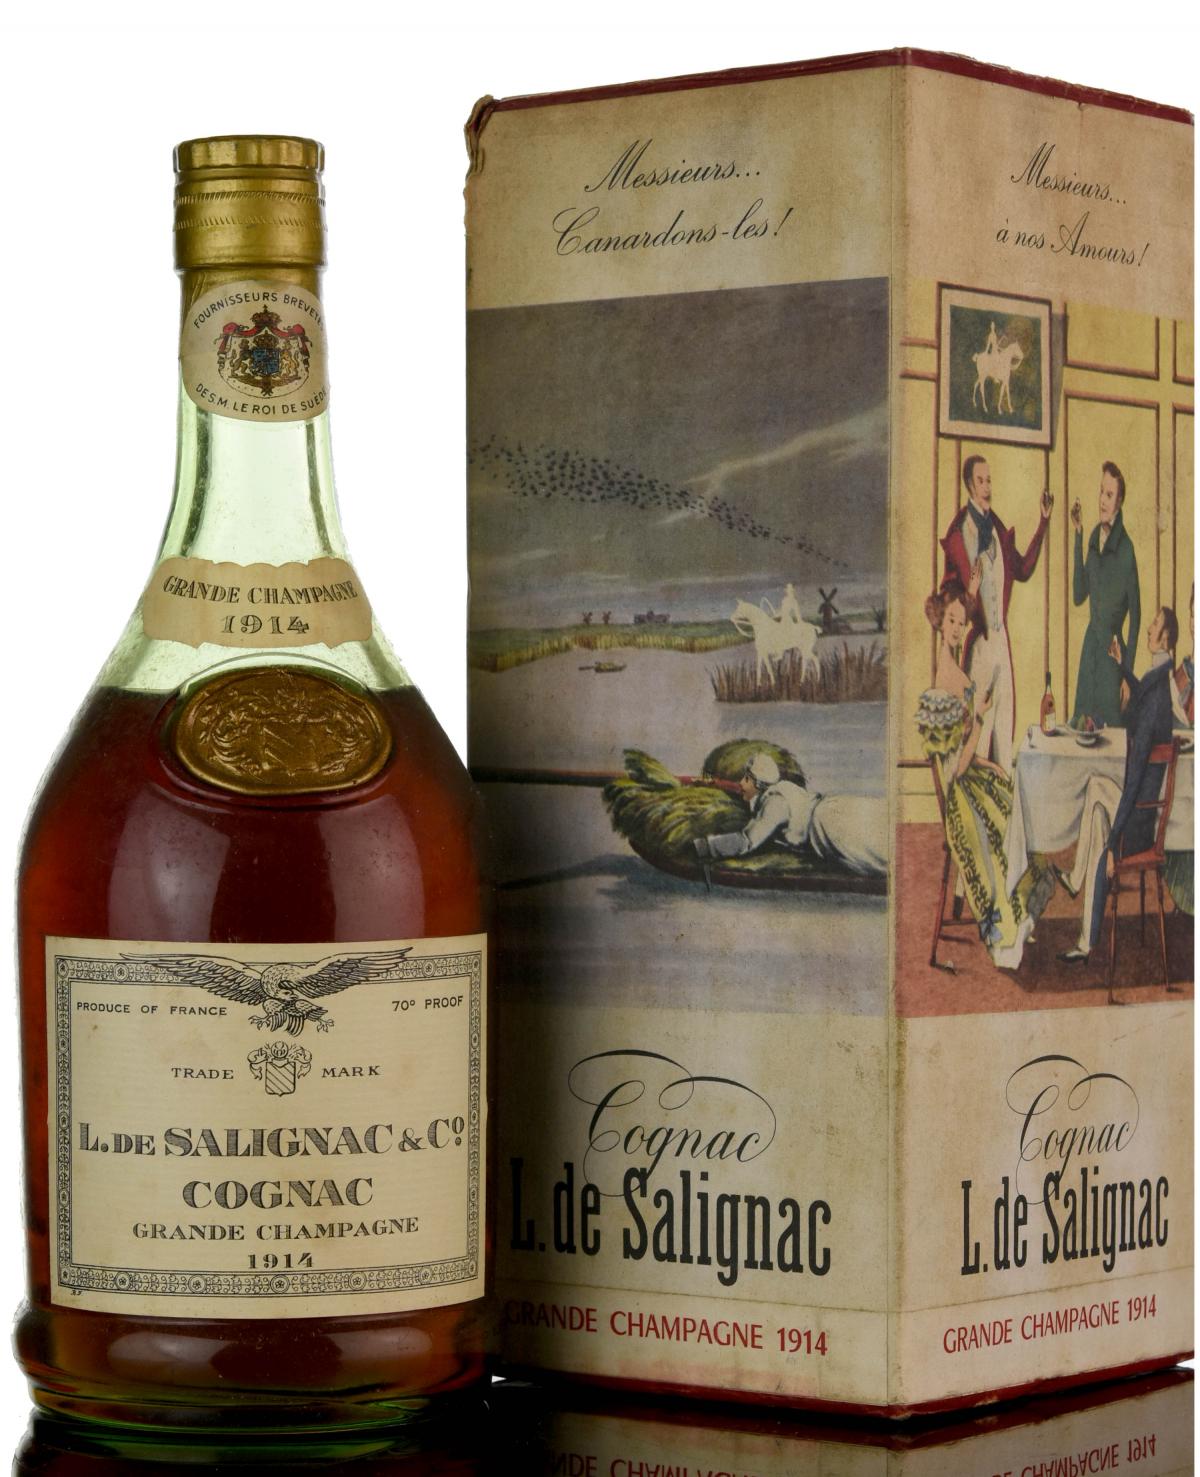 L.De Salignac 1914 Cognac